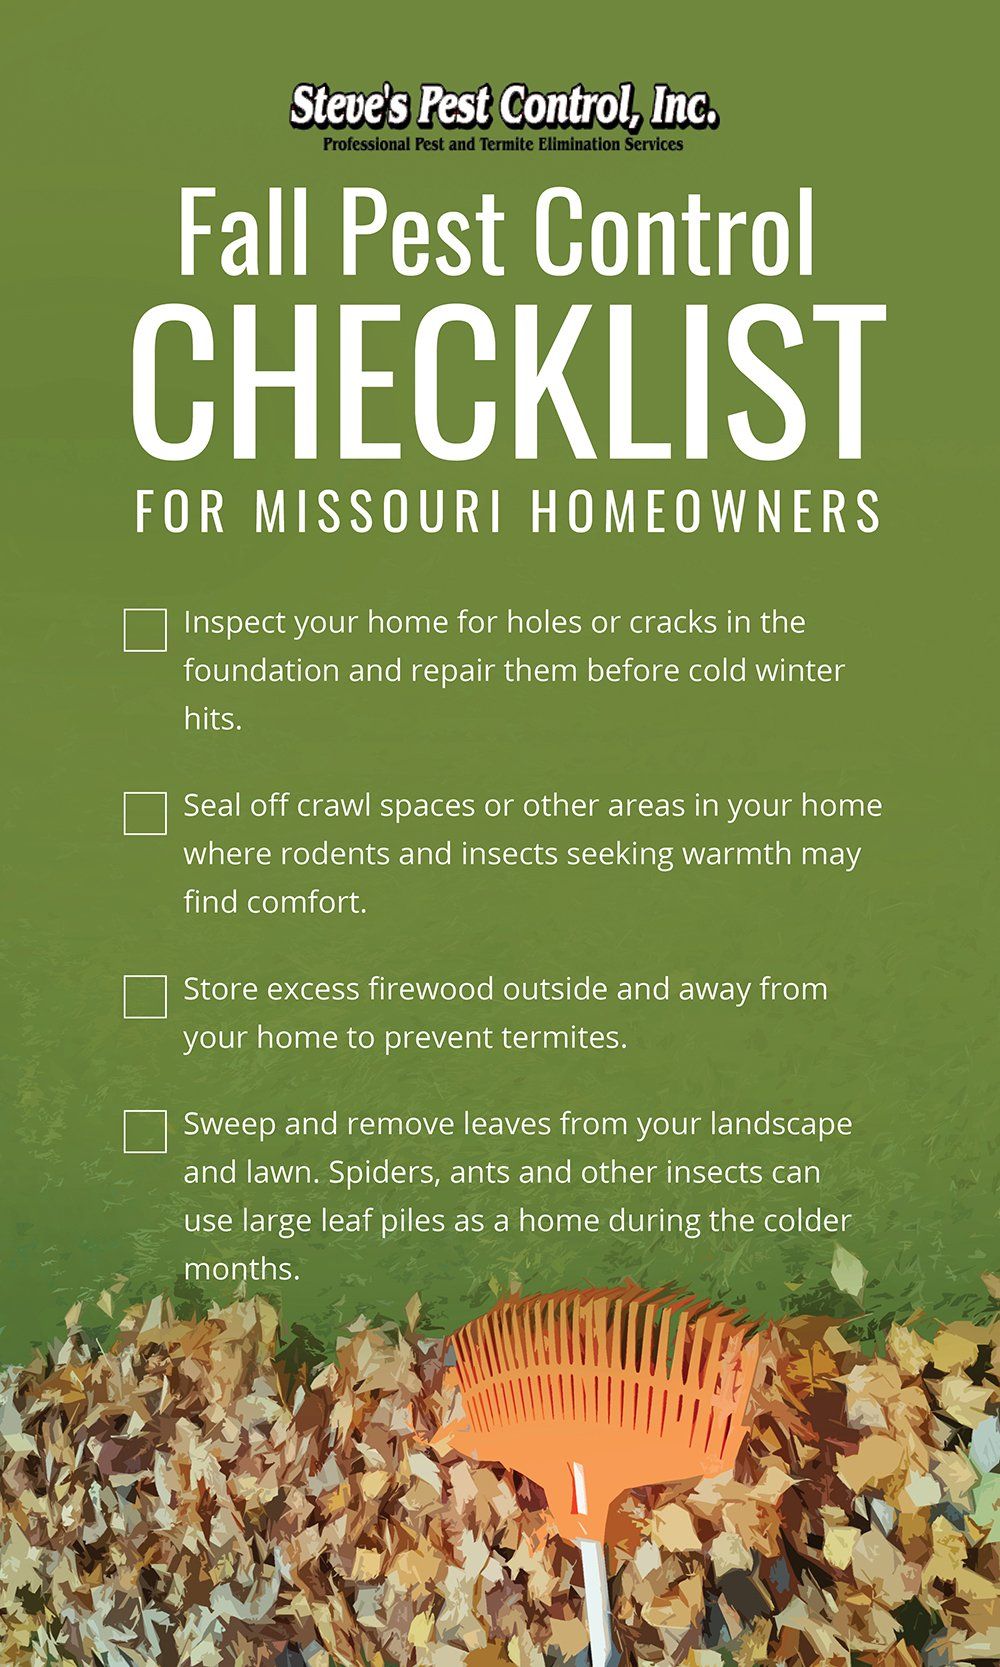 Steve Pest Control's Fall Pest Control checklist in mid-Missouri.